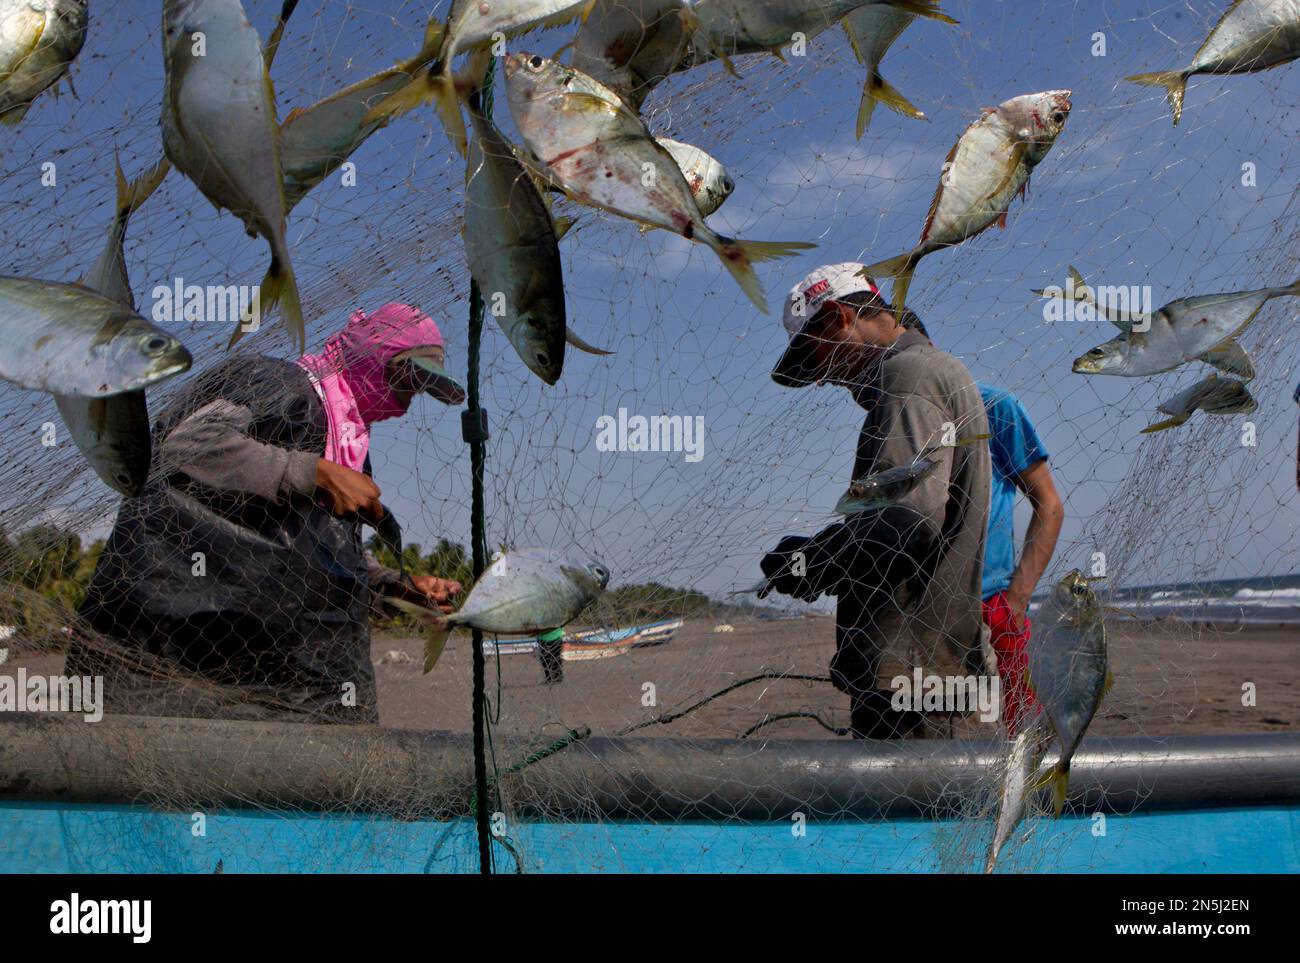 Fishermen clean their fishing net in the hometown of sea survivor Jose  Salvador Alvarenga, Garita Palmera, El Salvador, Tuesday, Feb. 4, 2014.  Alvarenga's survival after more than 13 months in an open